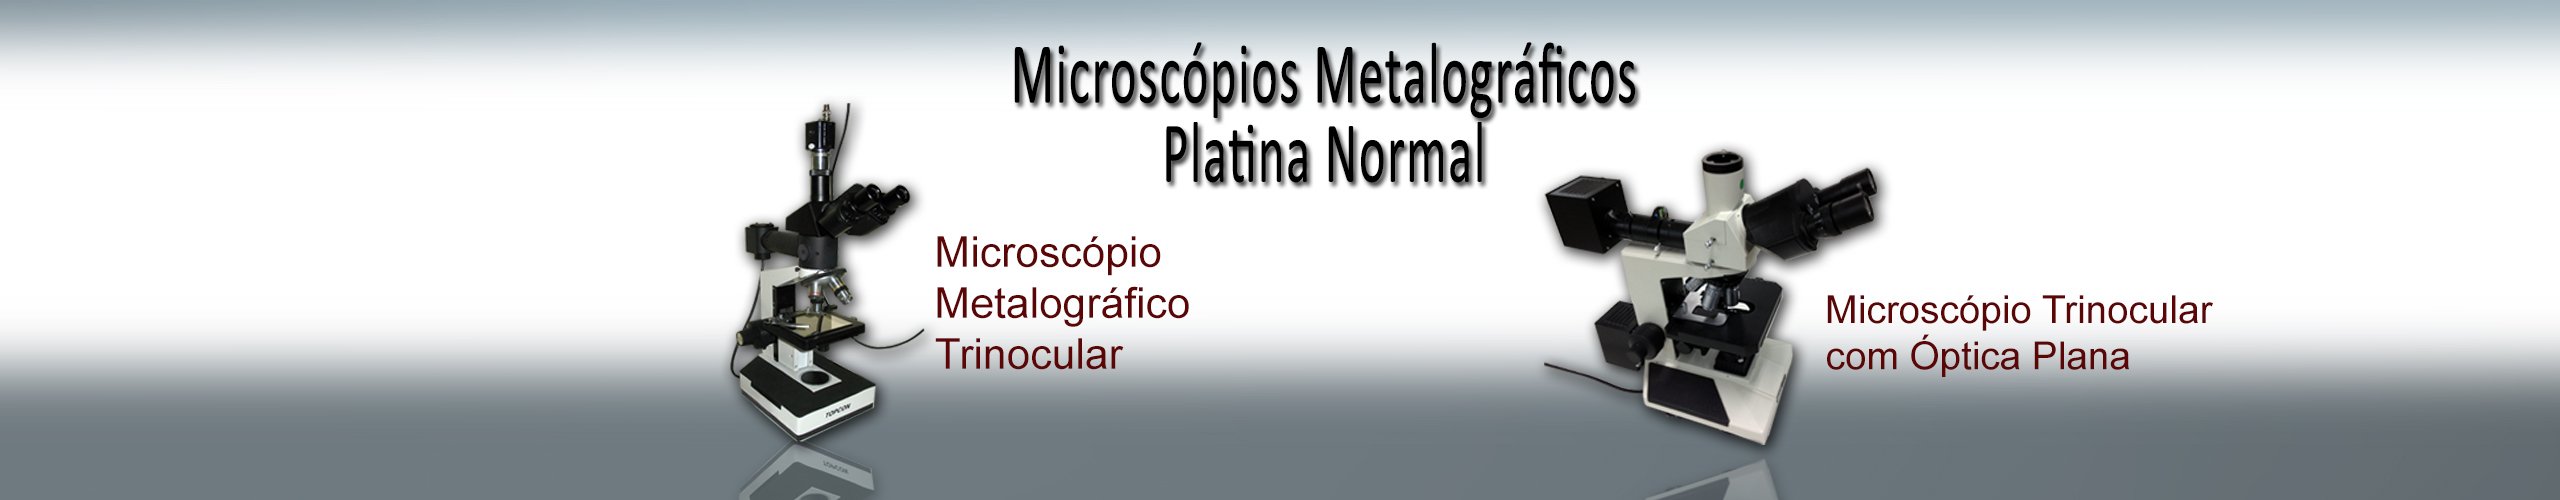 microscópio platina normal